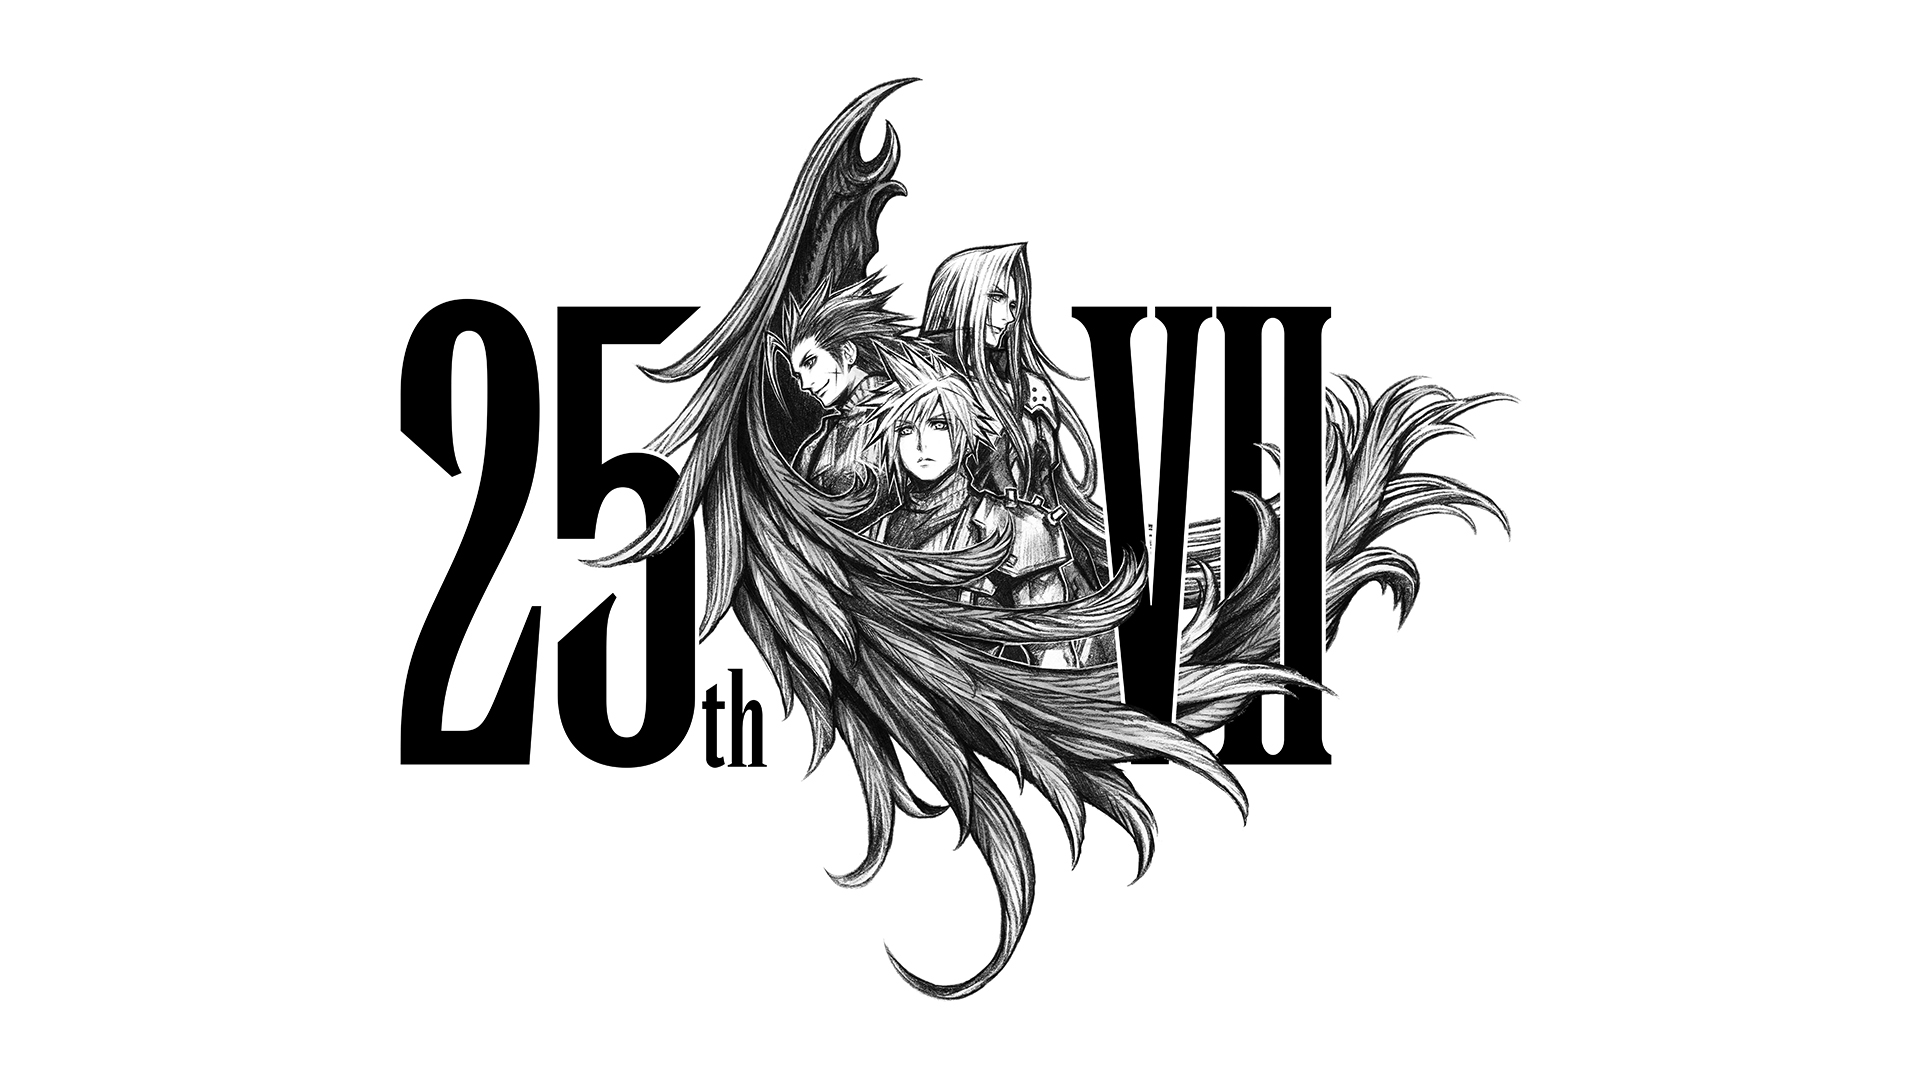 Final Fantasy Vii 25th Anniversary Logo Revealed Gematsu